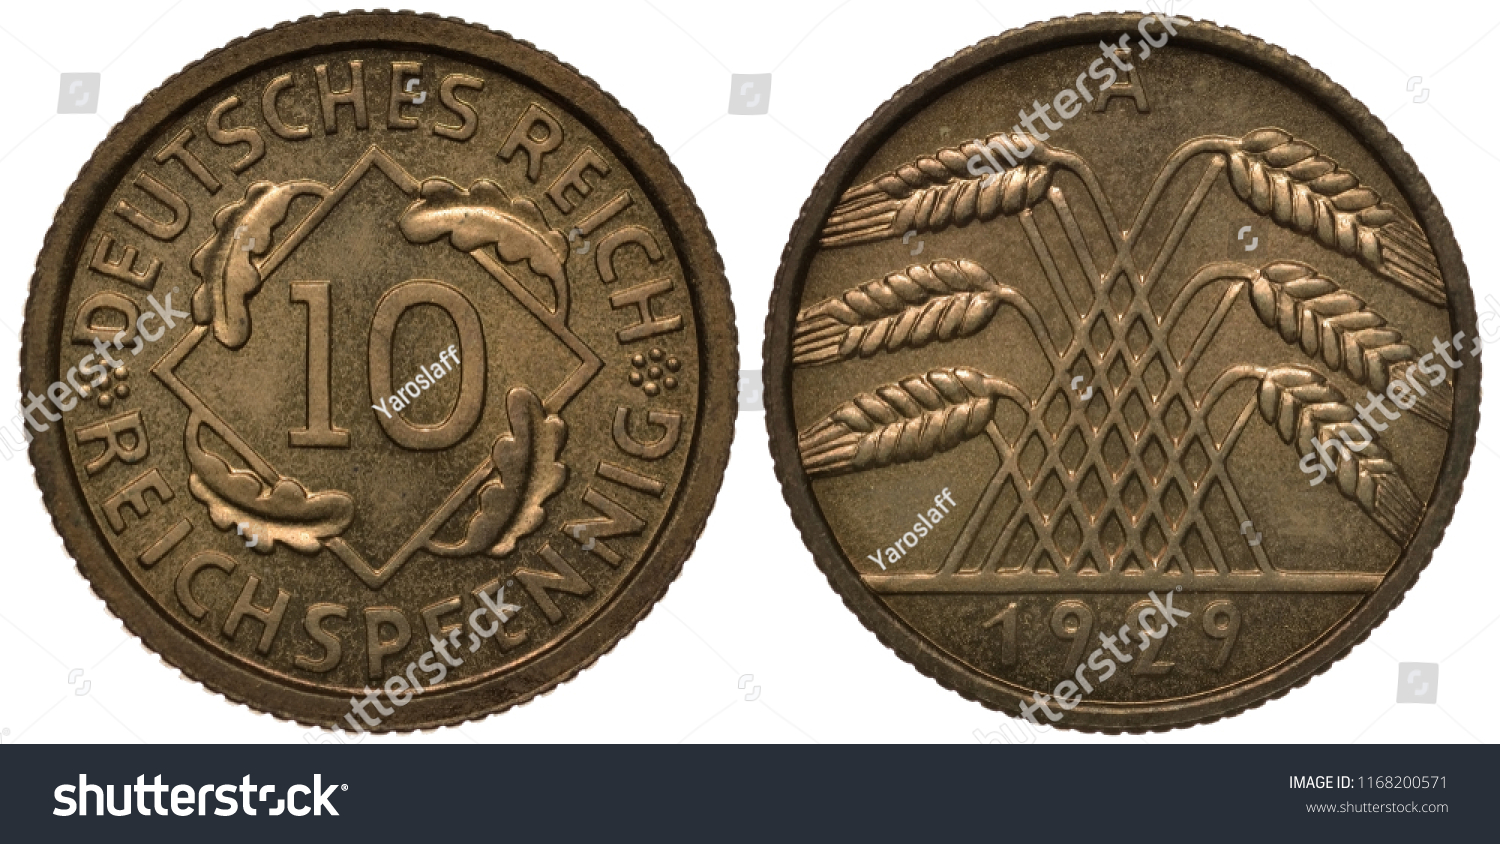 Germany German coin 10 ten reichspfennig 1929, digits of value within rhombus flanked by oak leaves, pyramid of grain stalks, date below, #1168200571